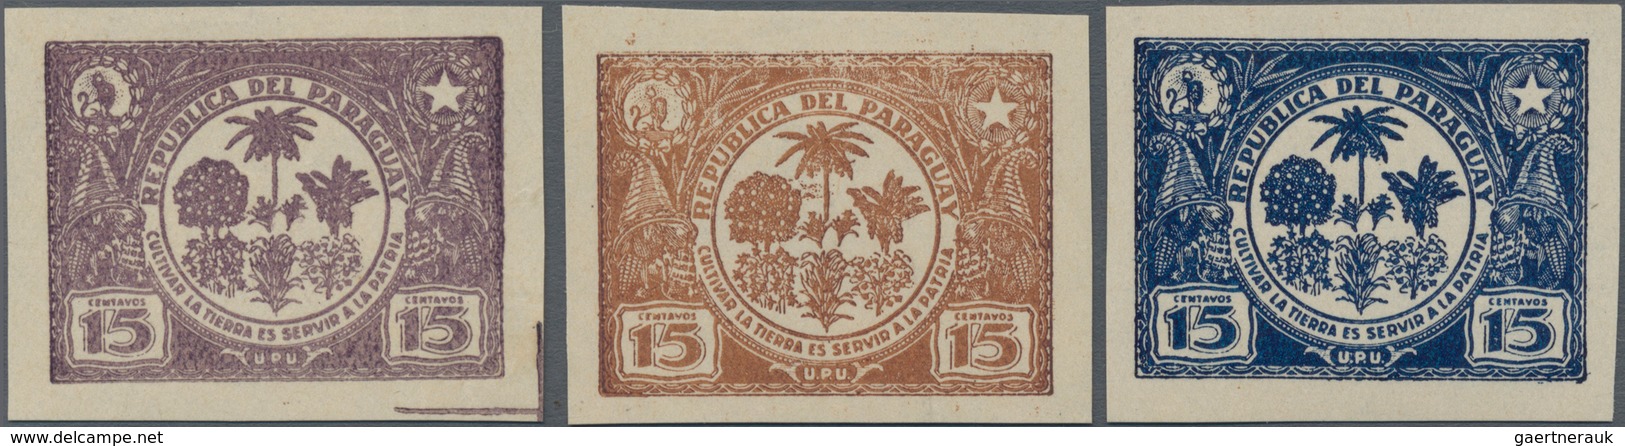 Thematik: Tabak / Tobacco: 1940, PARAGUAY: Prepared But Unissued Stamp 15 Cent. 'Cultivar La Tierra' - Tabak